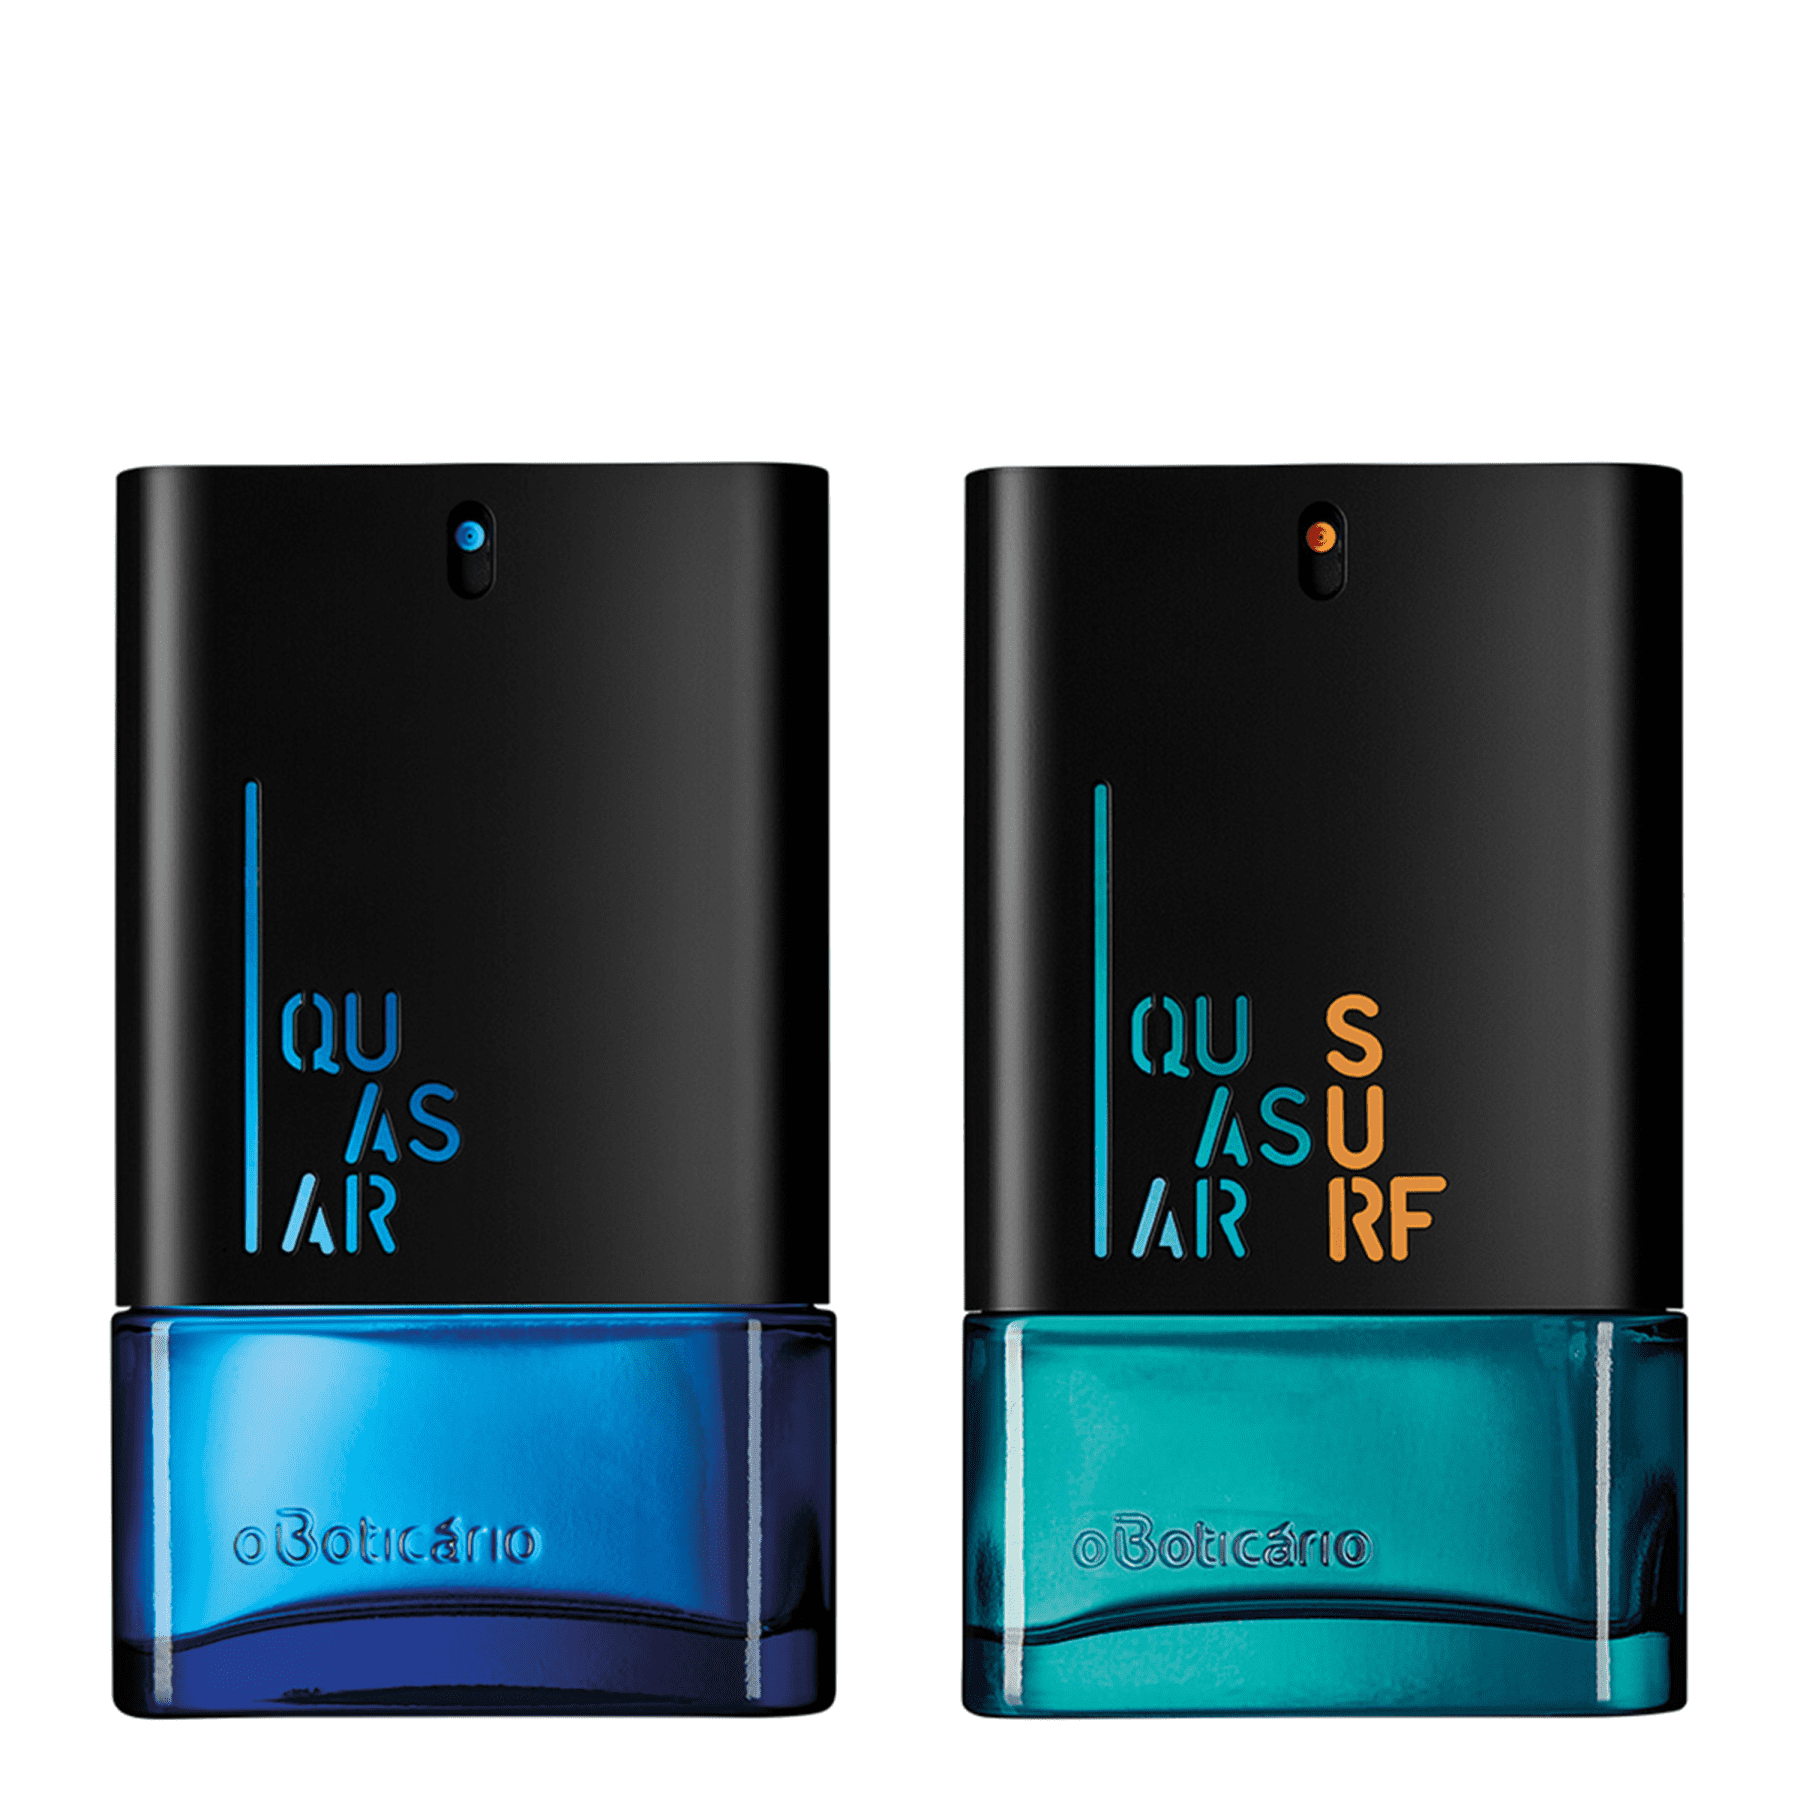 Kit Perfumery Quasar: Quasar Deodorant Cologne 100ml + Quasar Surf Deodorante Cologne 100ml - o Boticario